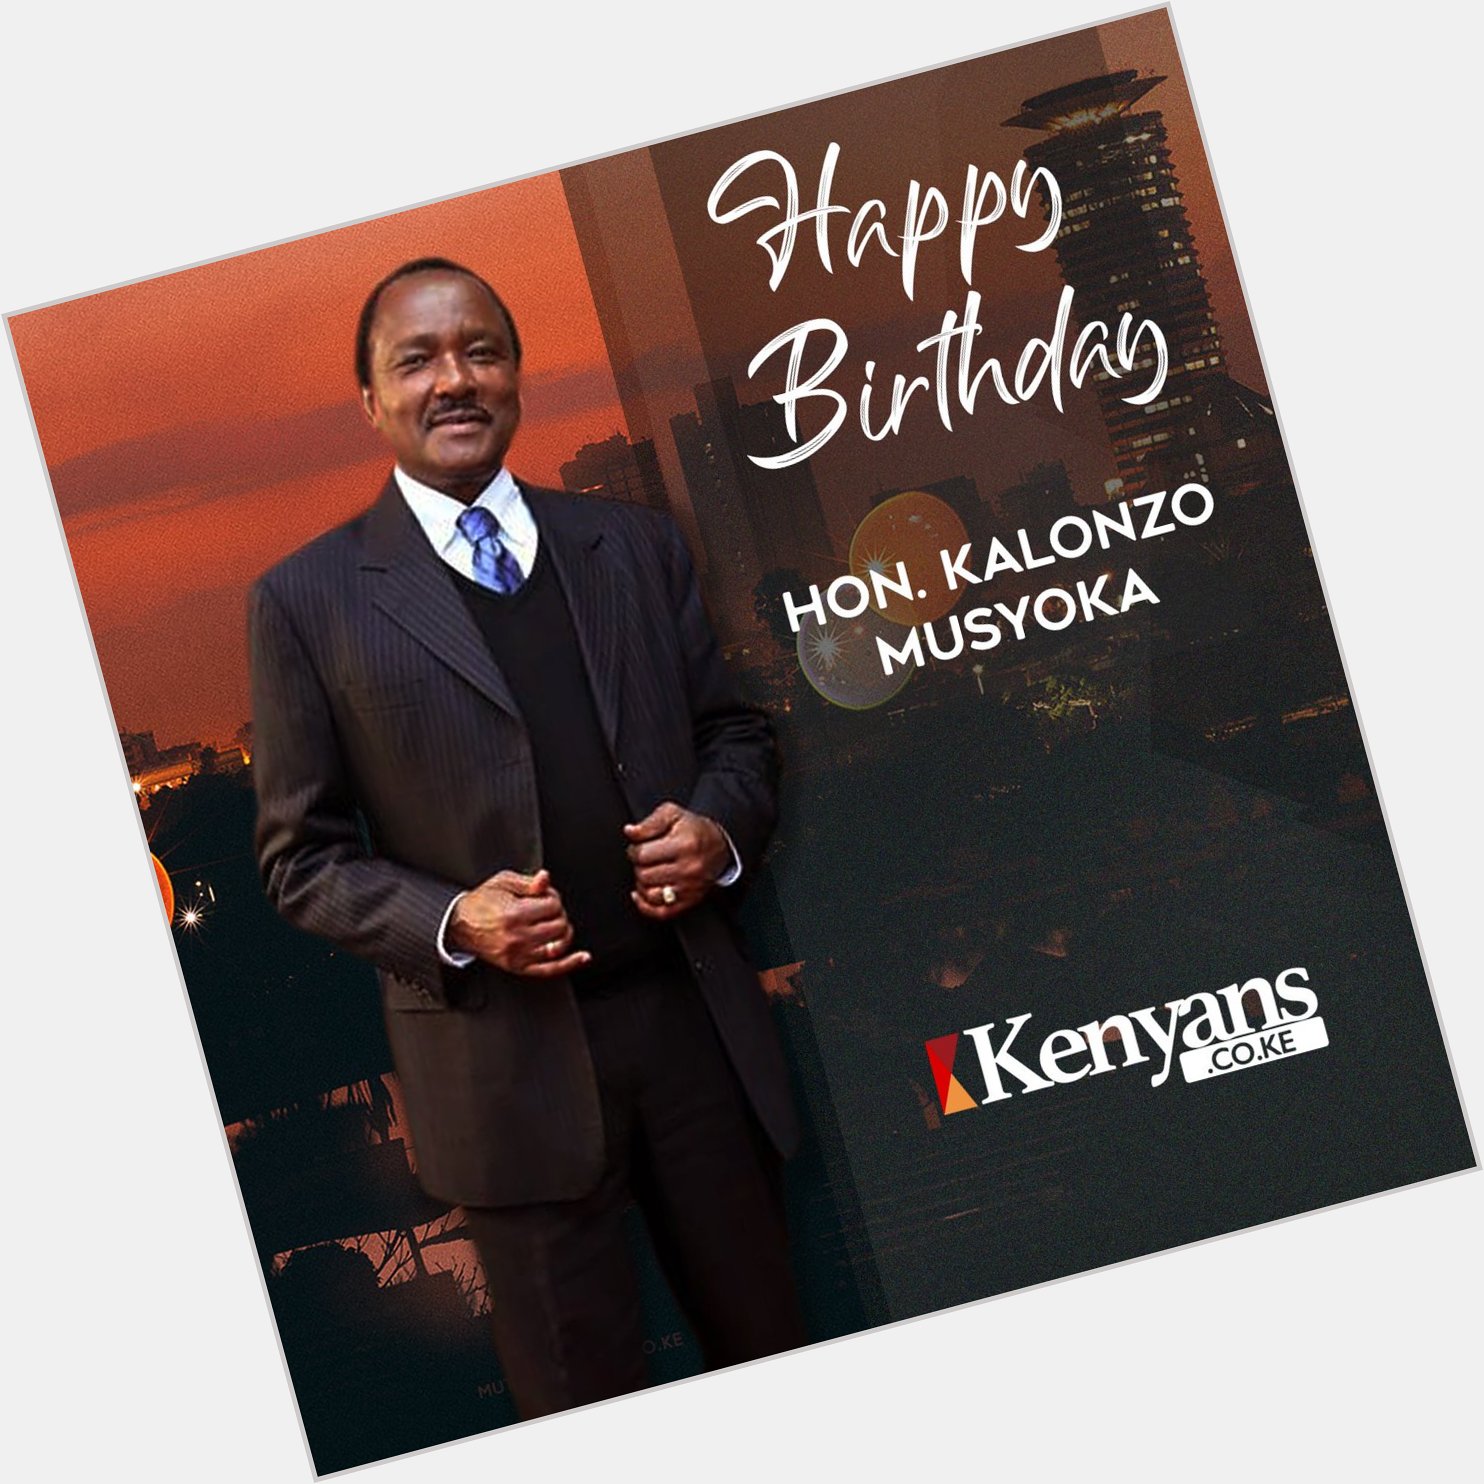 Happy birthday to Kalonzo Musyoka he turns 65 We wish him nothing but the very best in his new year. 